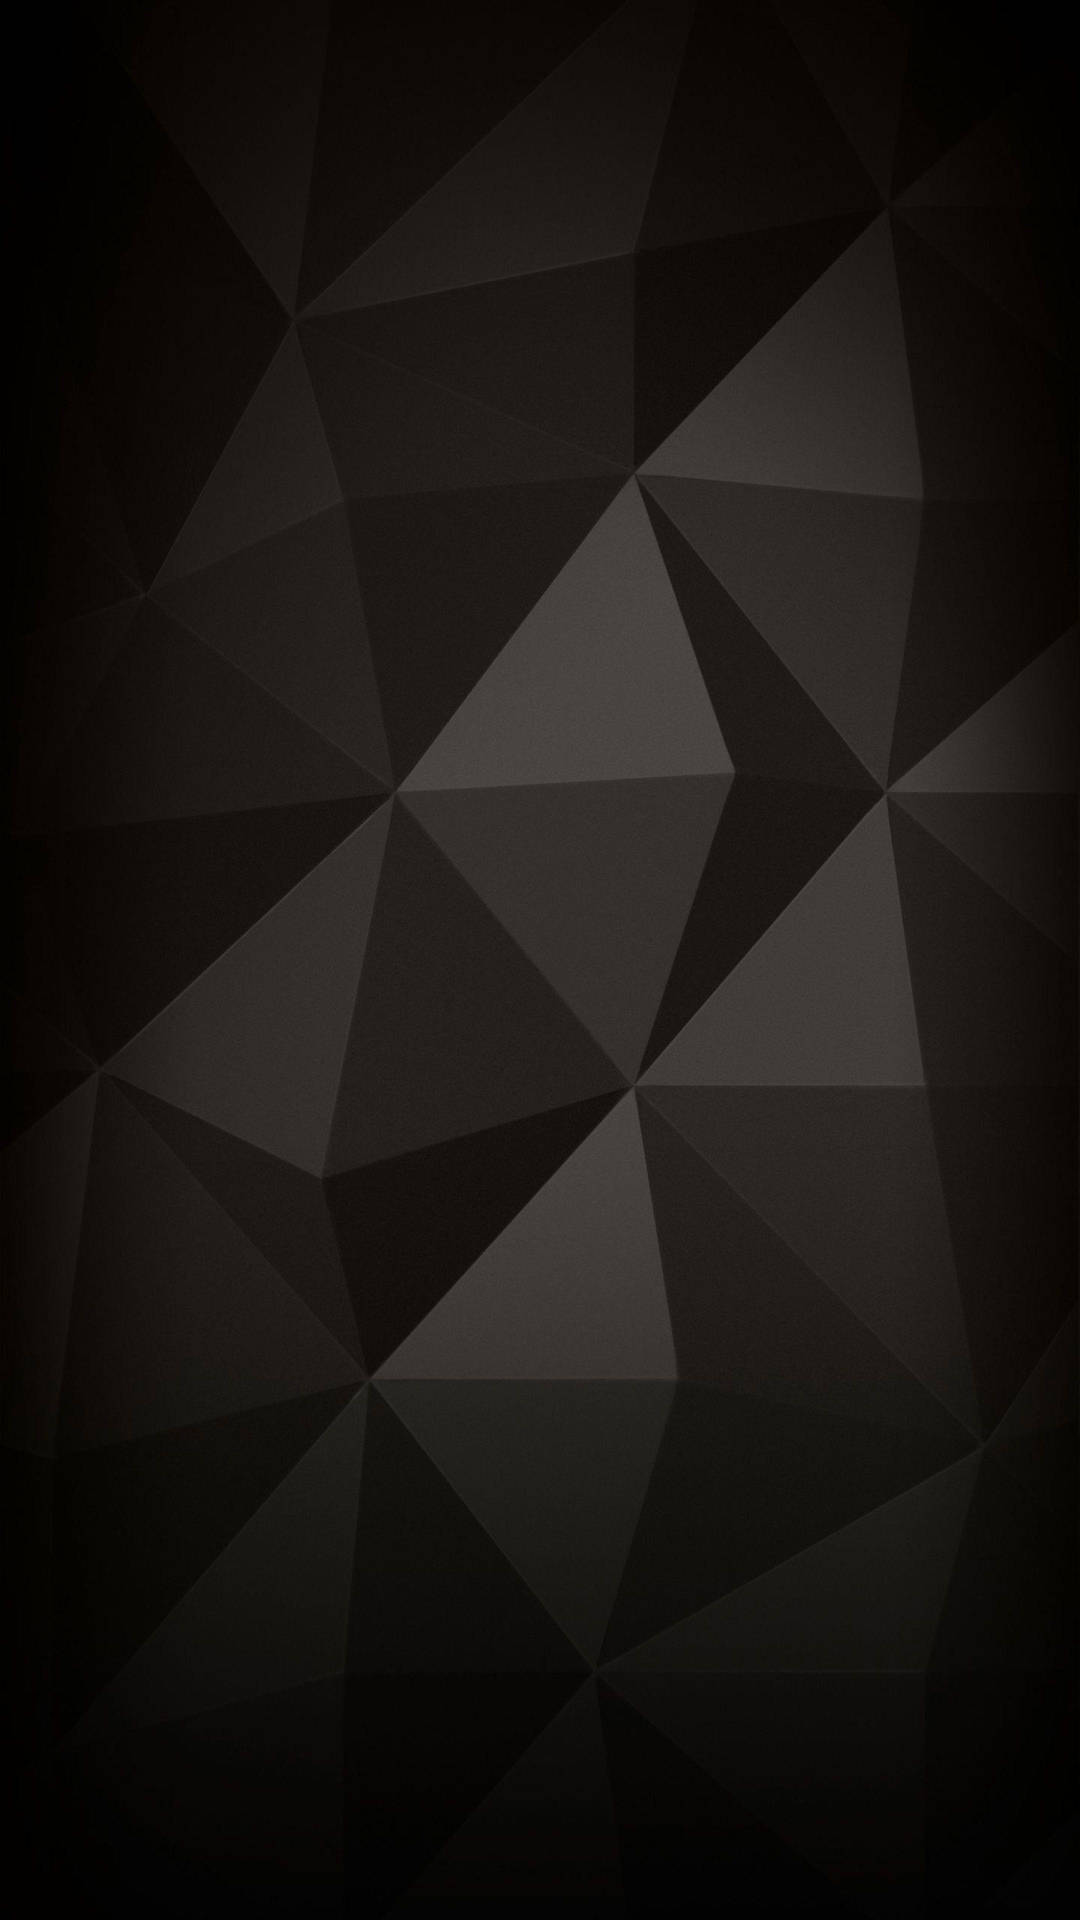 Blackneonspace  Galaxy wallpaper iphone Galaxy phone wallpaper Android  wallpaper abstract